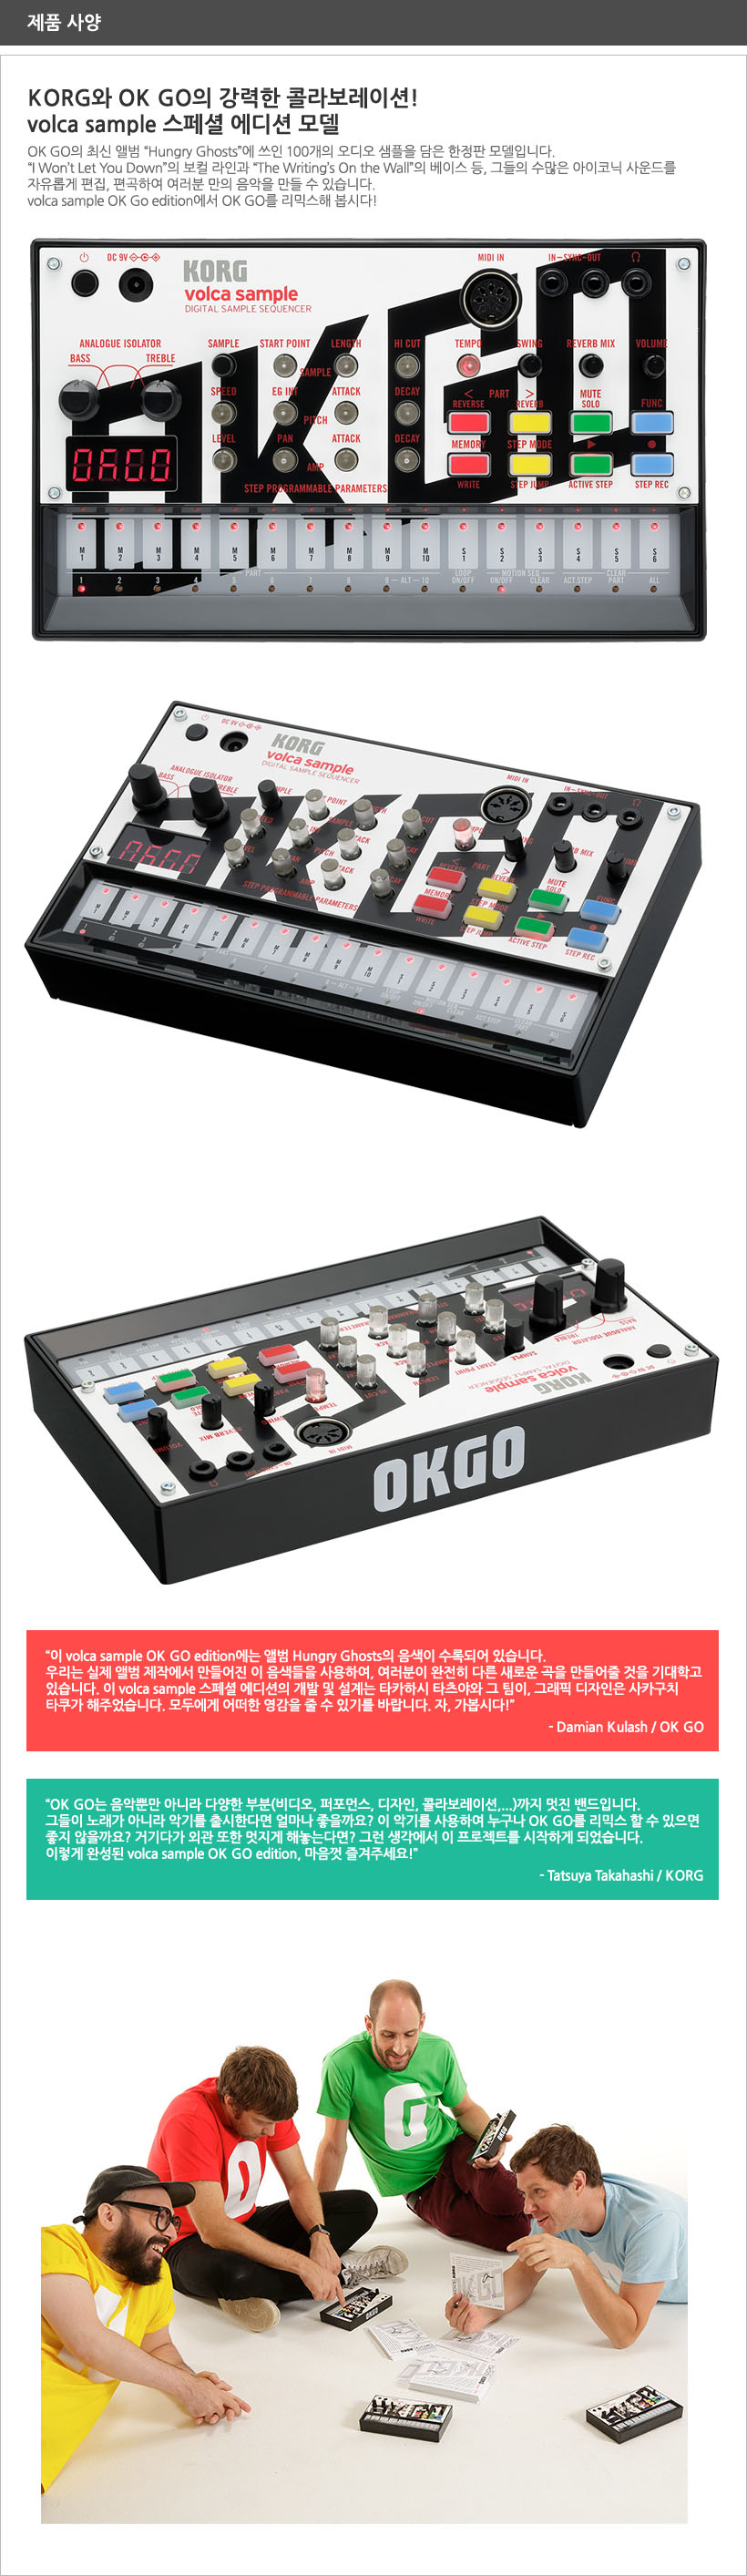 volca sample OK GO edition  제품구성